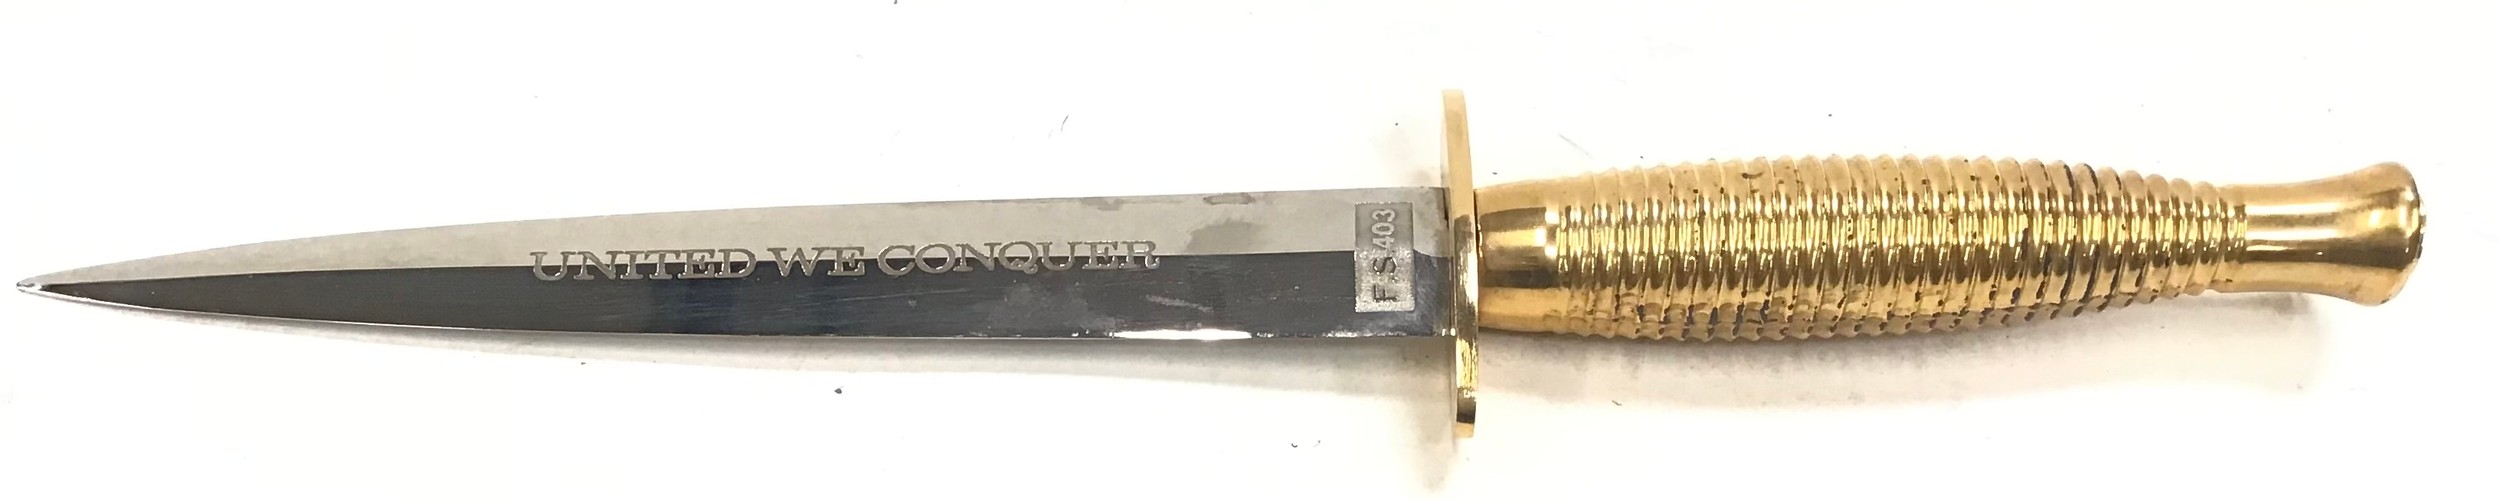 Commemorative Wilkinson sword Ltd commando dagger/knife. - Image 3 of 3